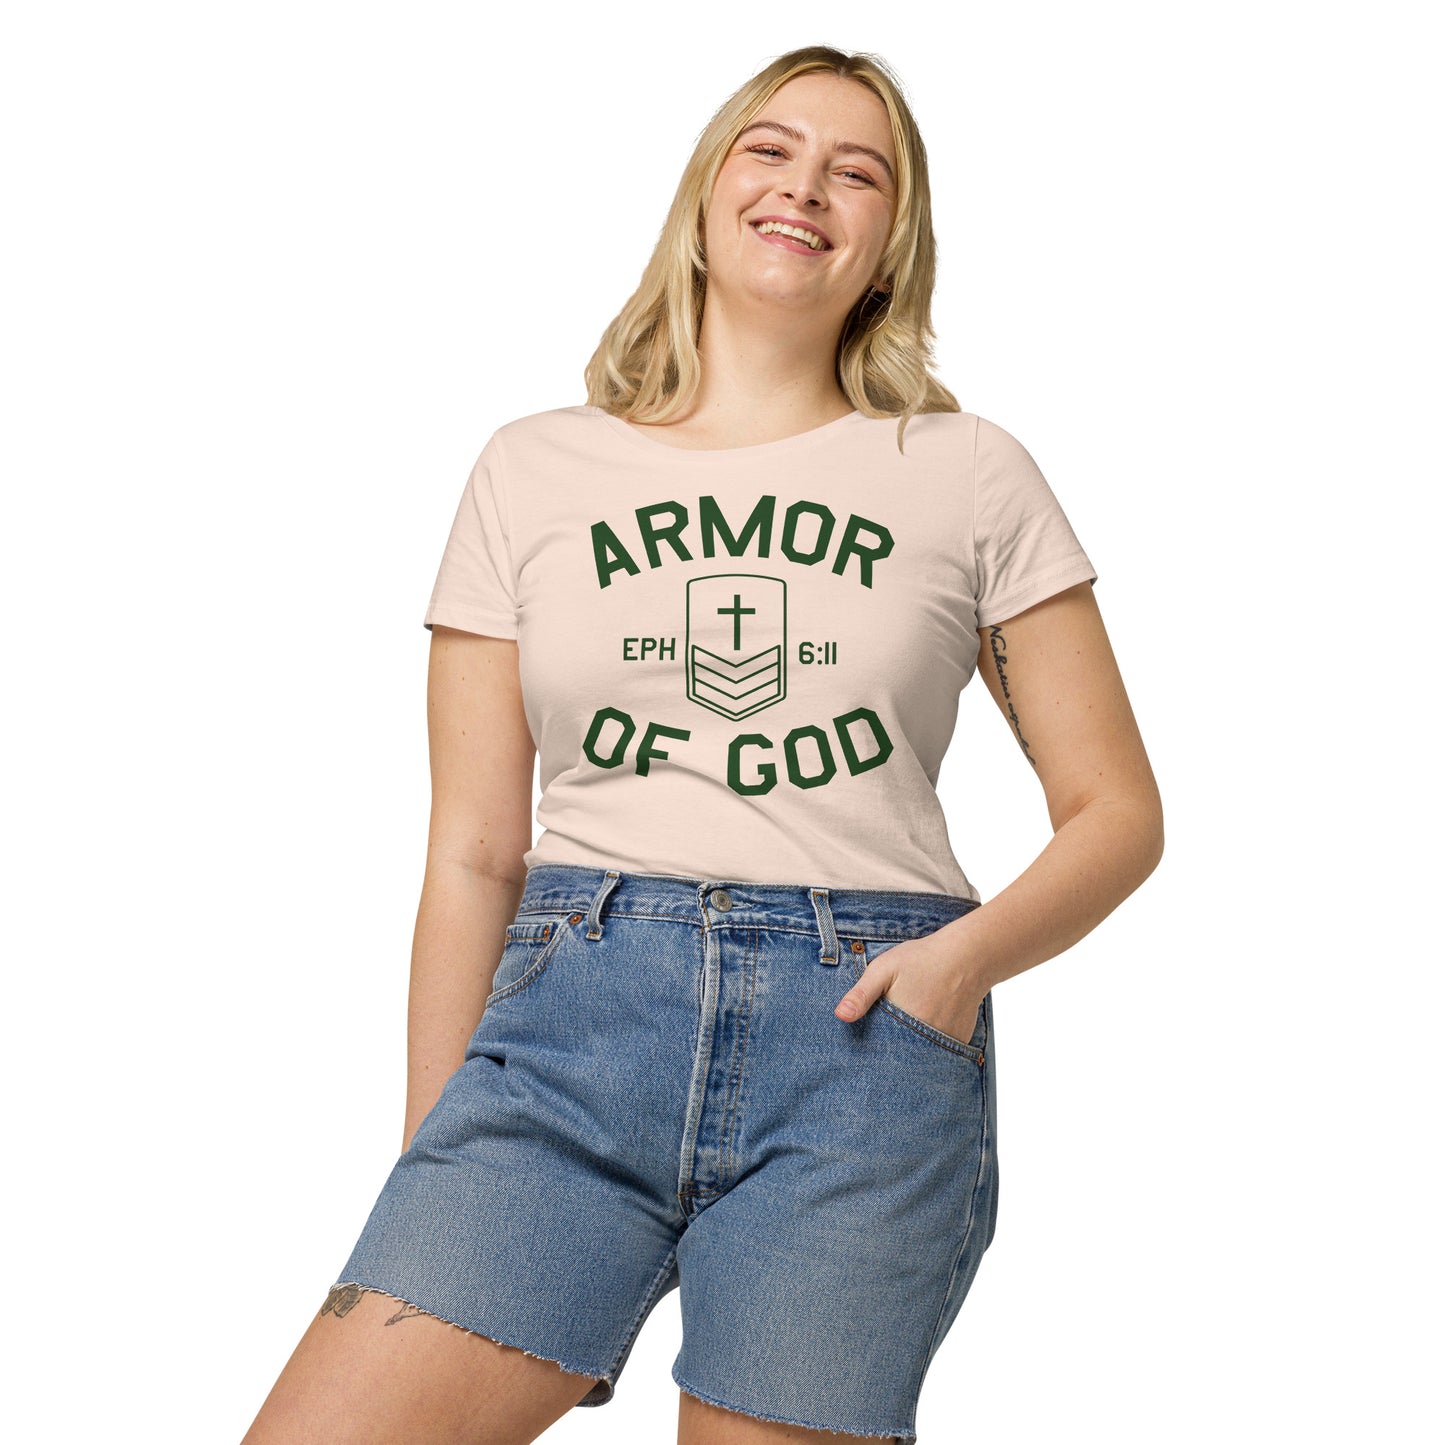 Armor of God Women’s basic organic t-shirt